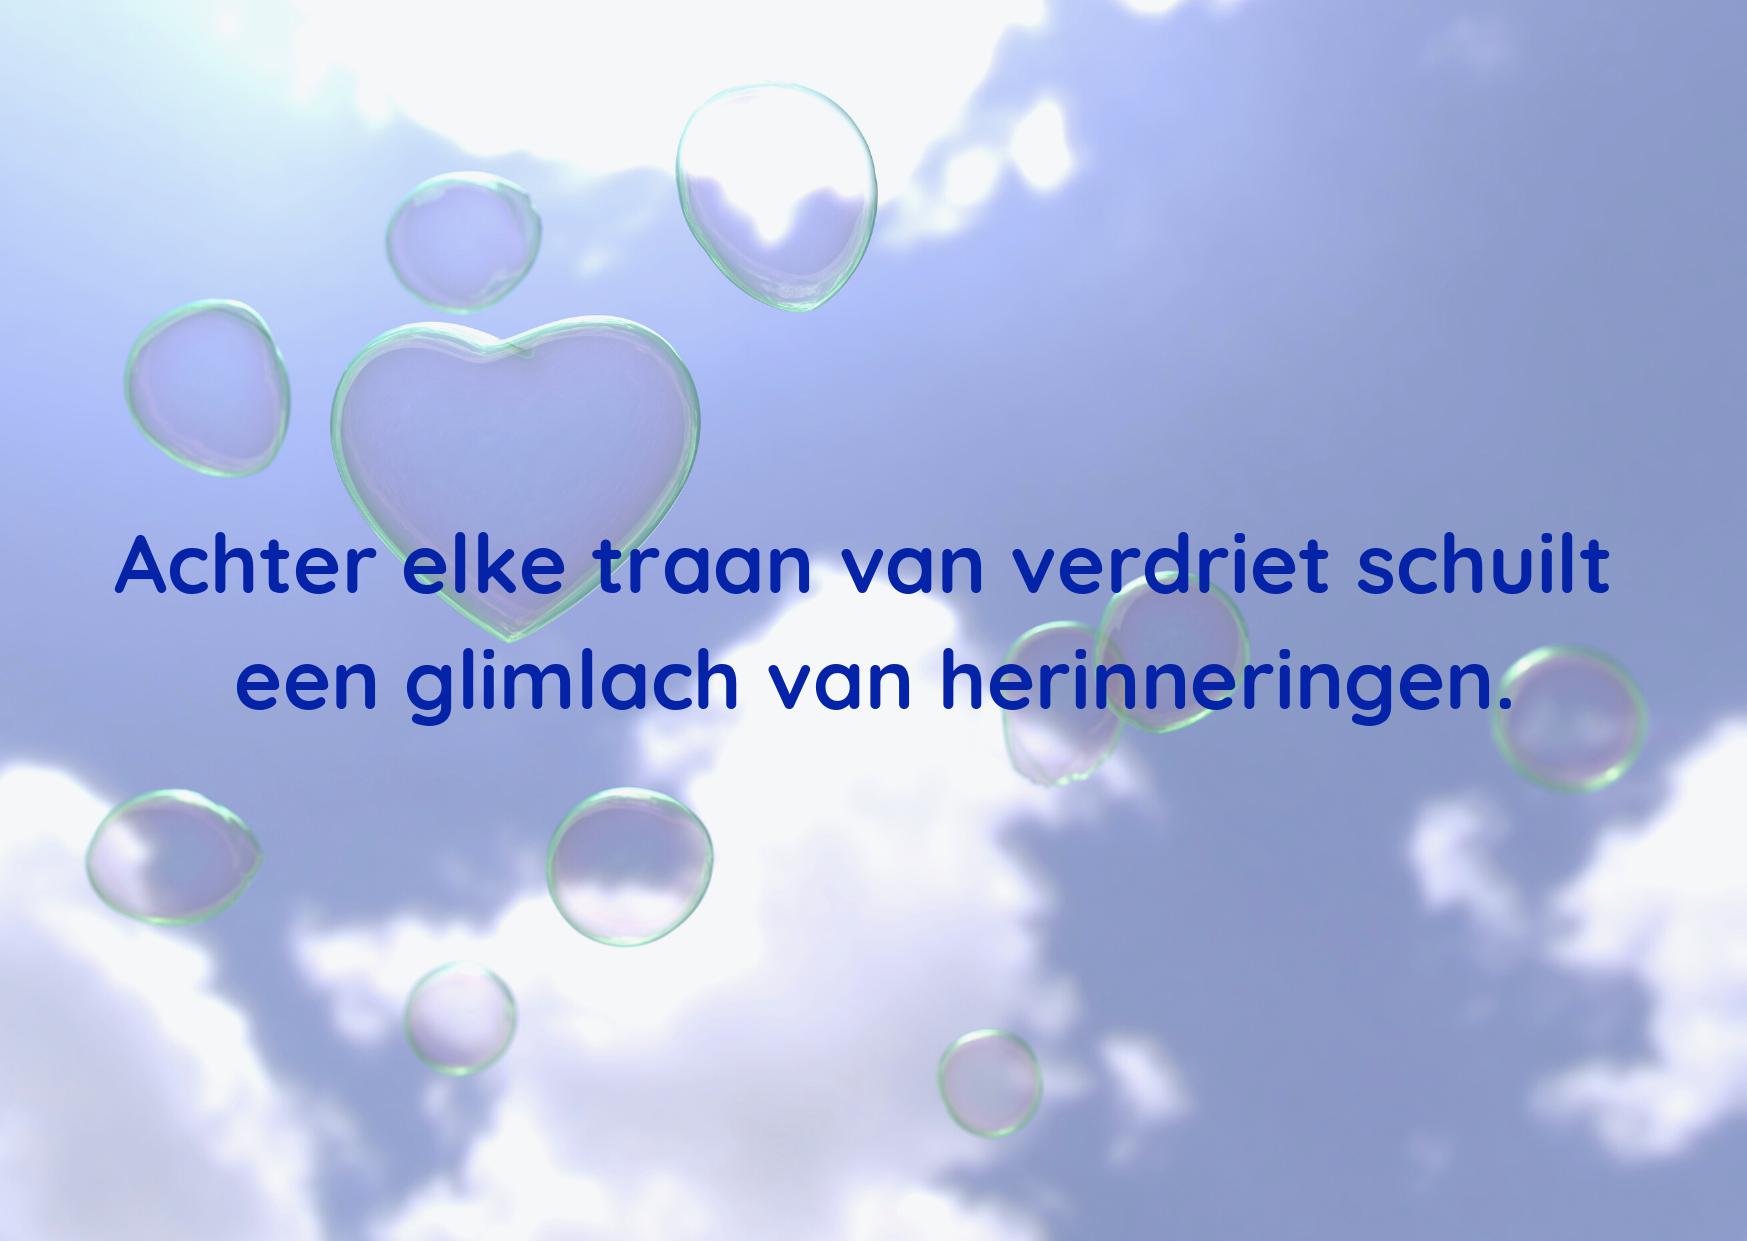 Troostkaart - Wenskaart - glimlach van herinneringen - traan van verdriet - RememberMe webshop - rouw - troost - verlies - steun